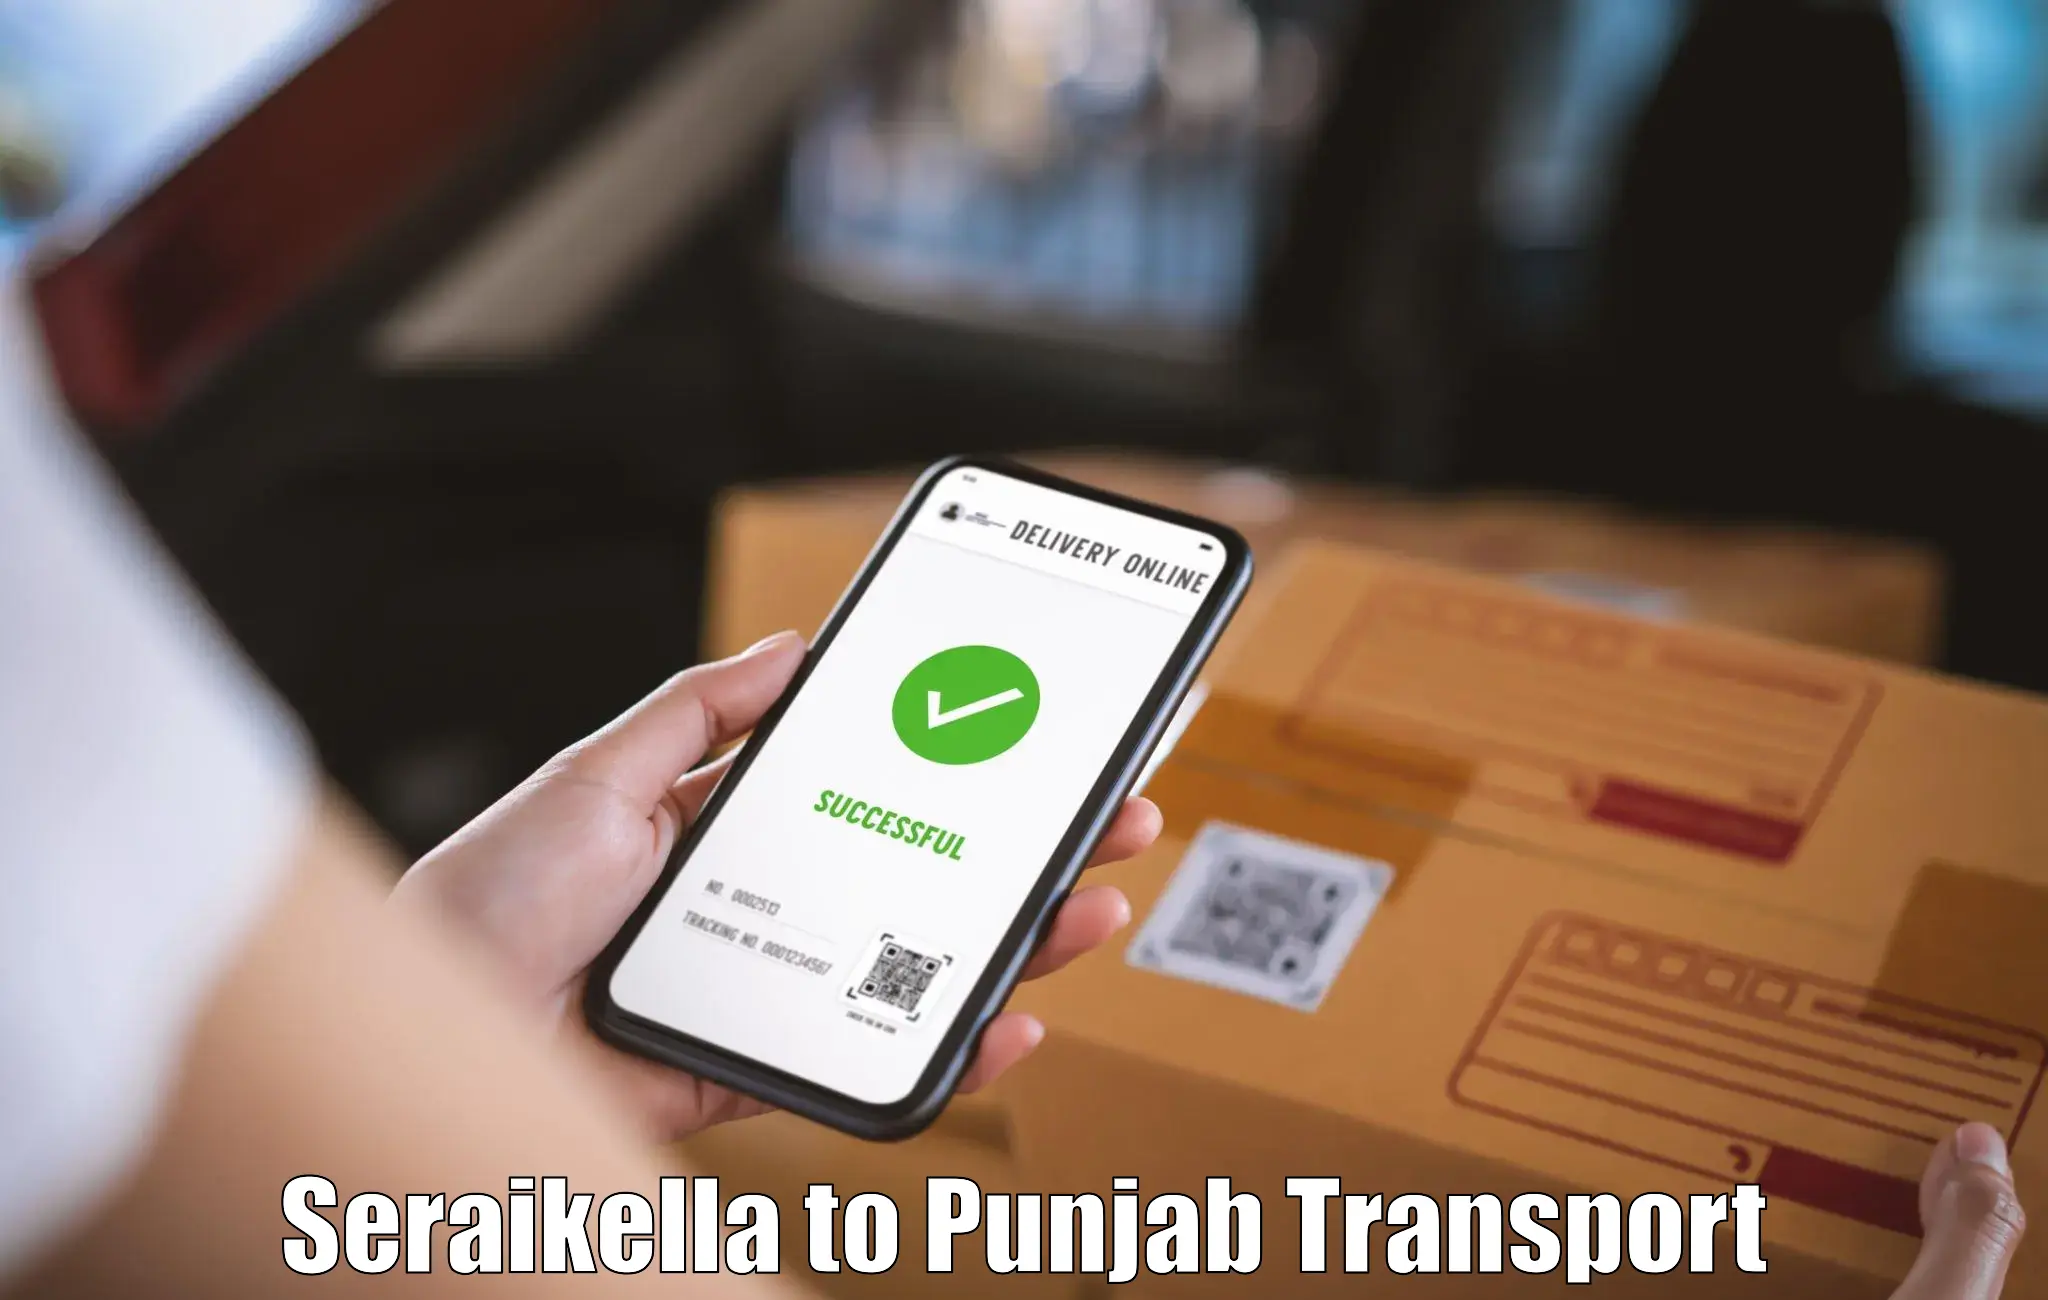 Commercial transport service Seraikella to Punjab